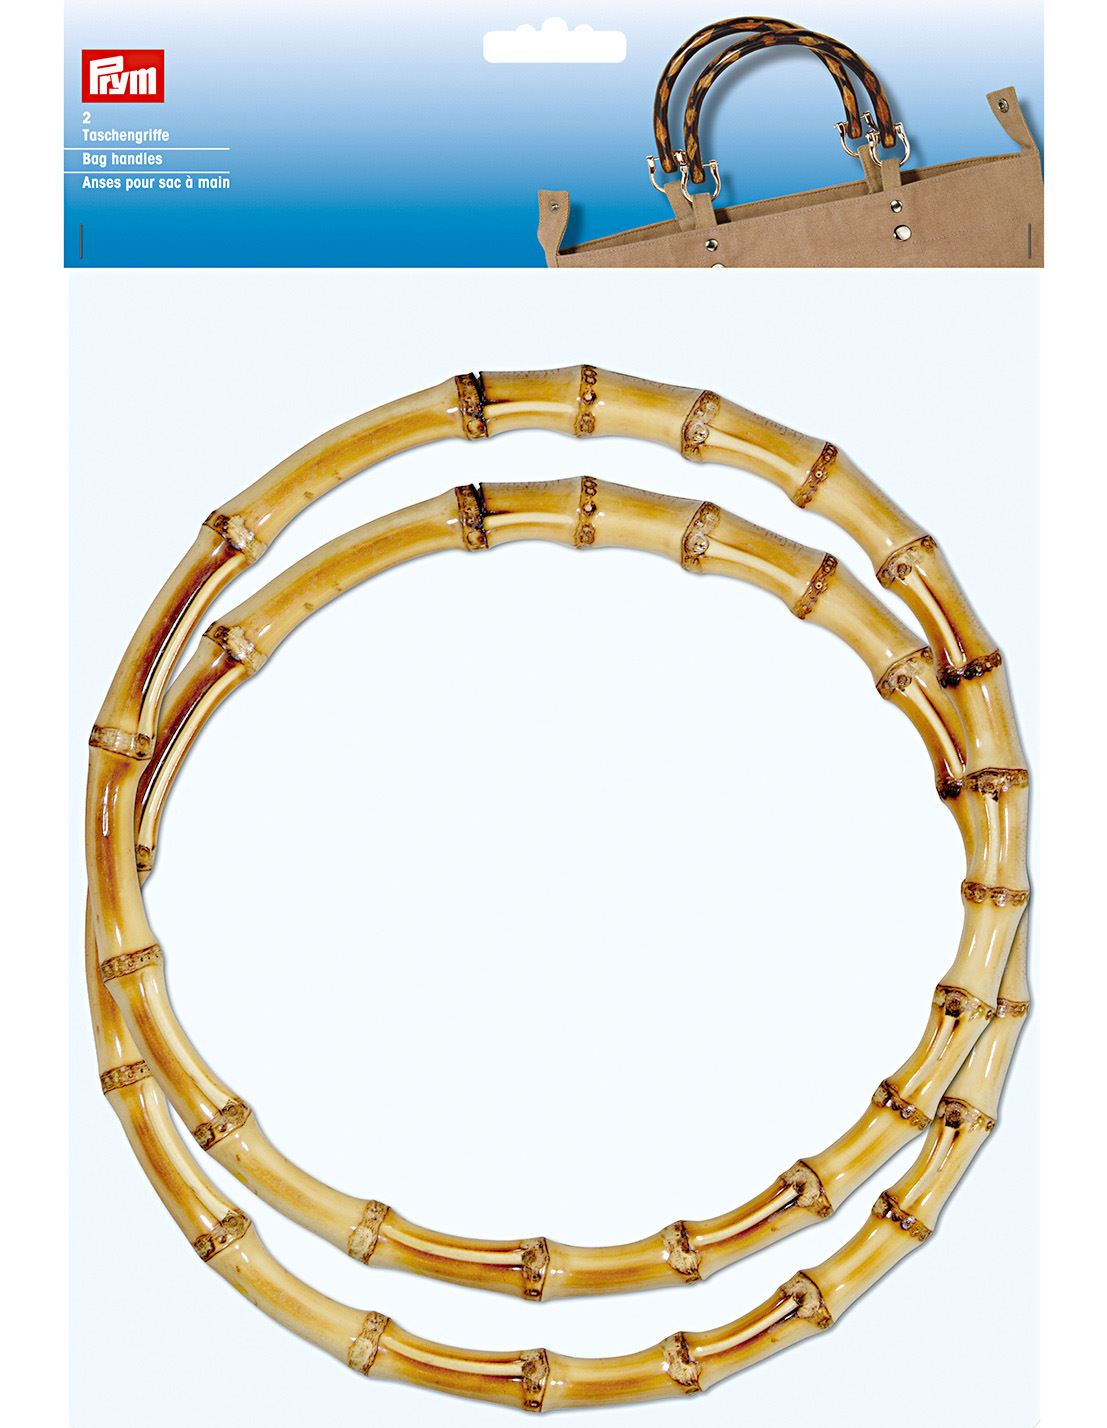 Prym "Keiko" (615111) circular bamboo handles - 22cm